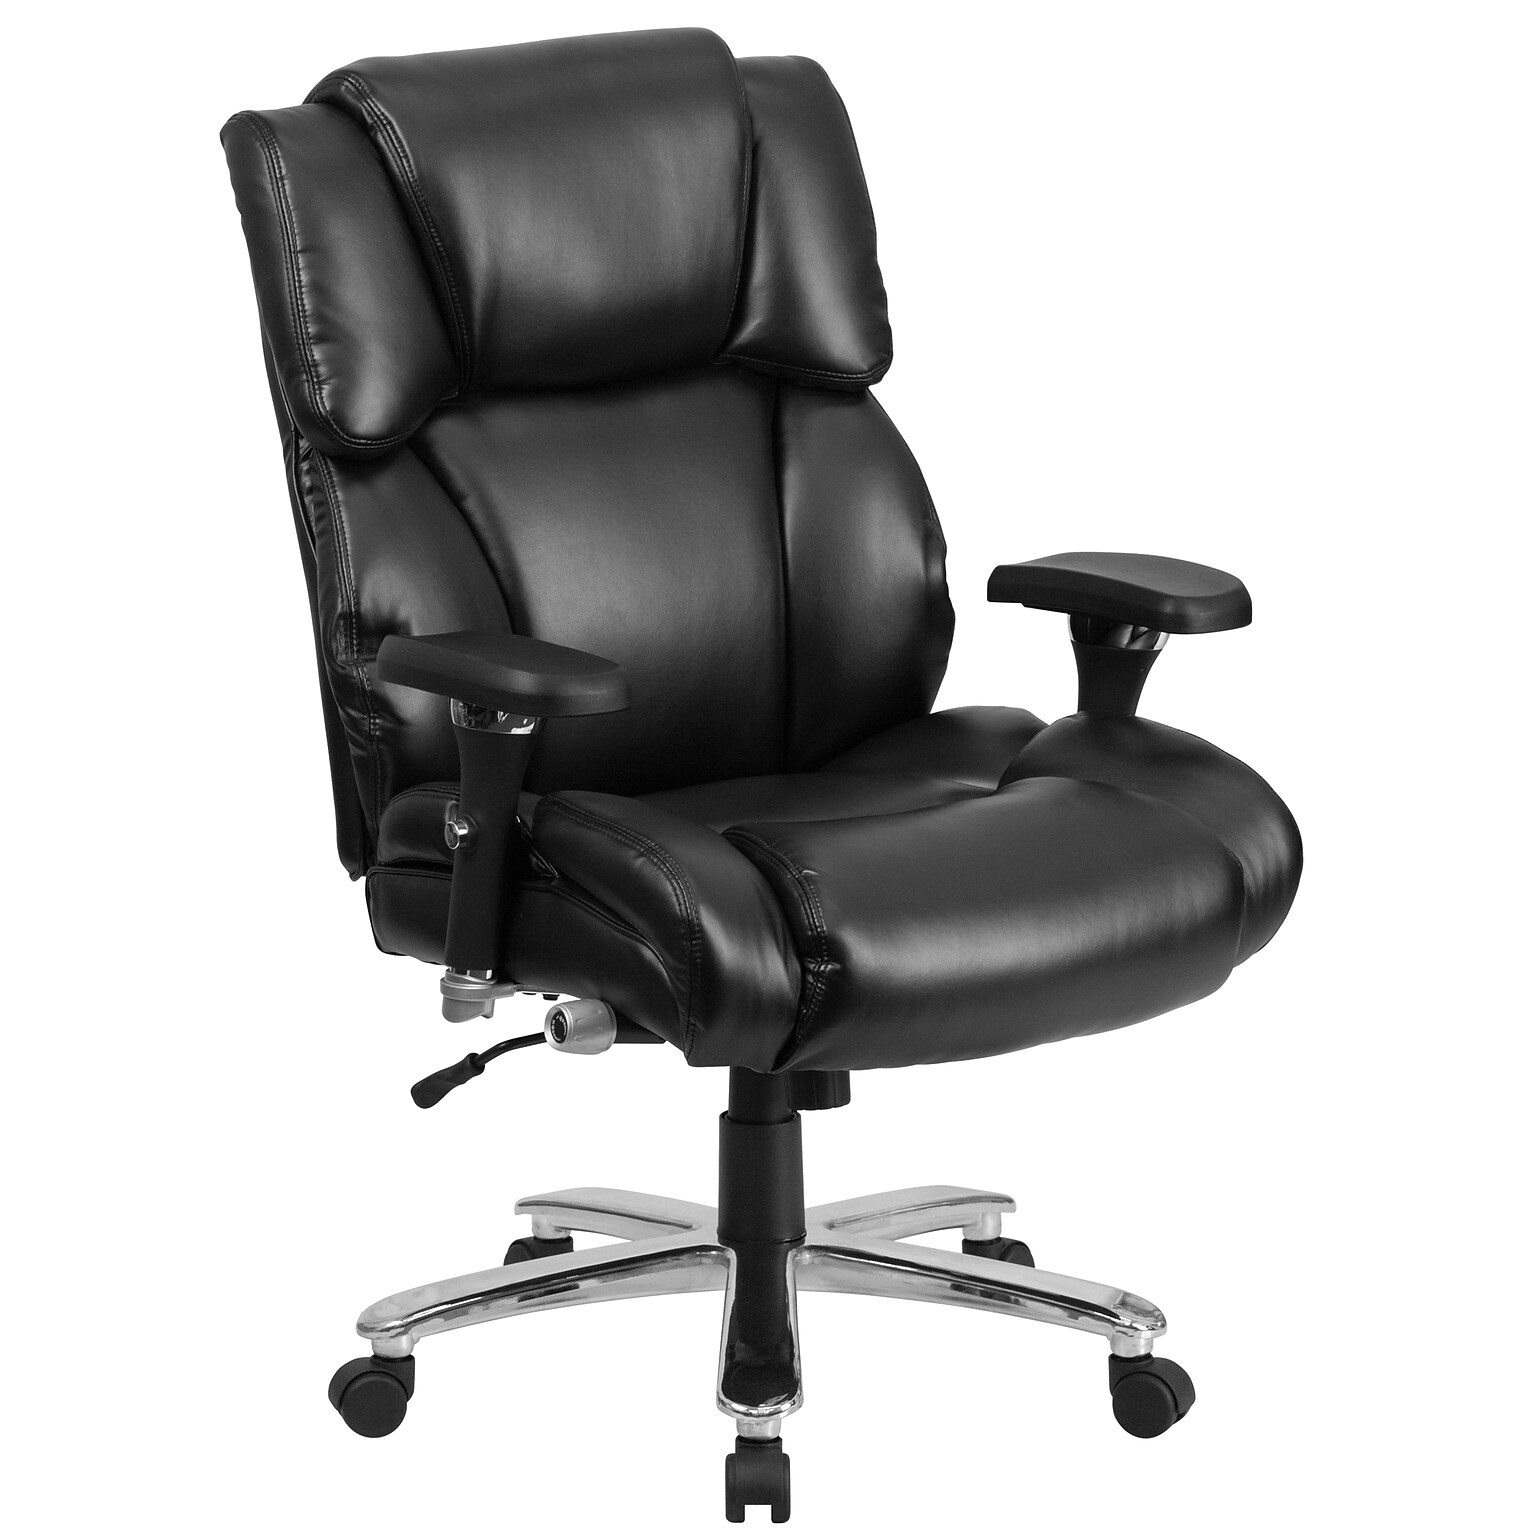 Flash Furniture HERCULES Series LeatherSoft Swivel 24/7 Intensive Use Big & Tall Executive Office Chair, Black (GO2149LEA)